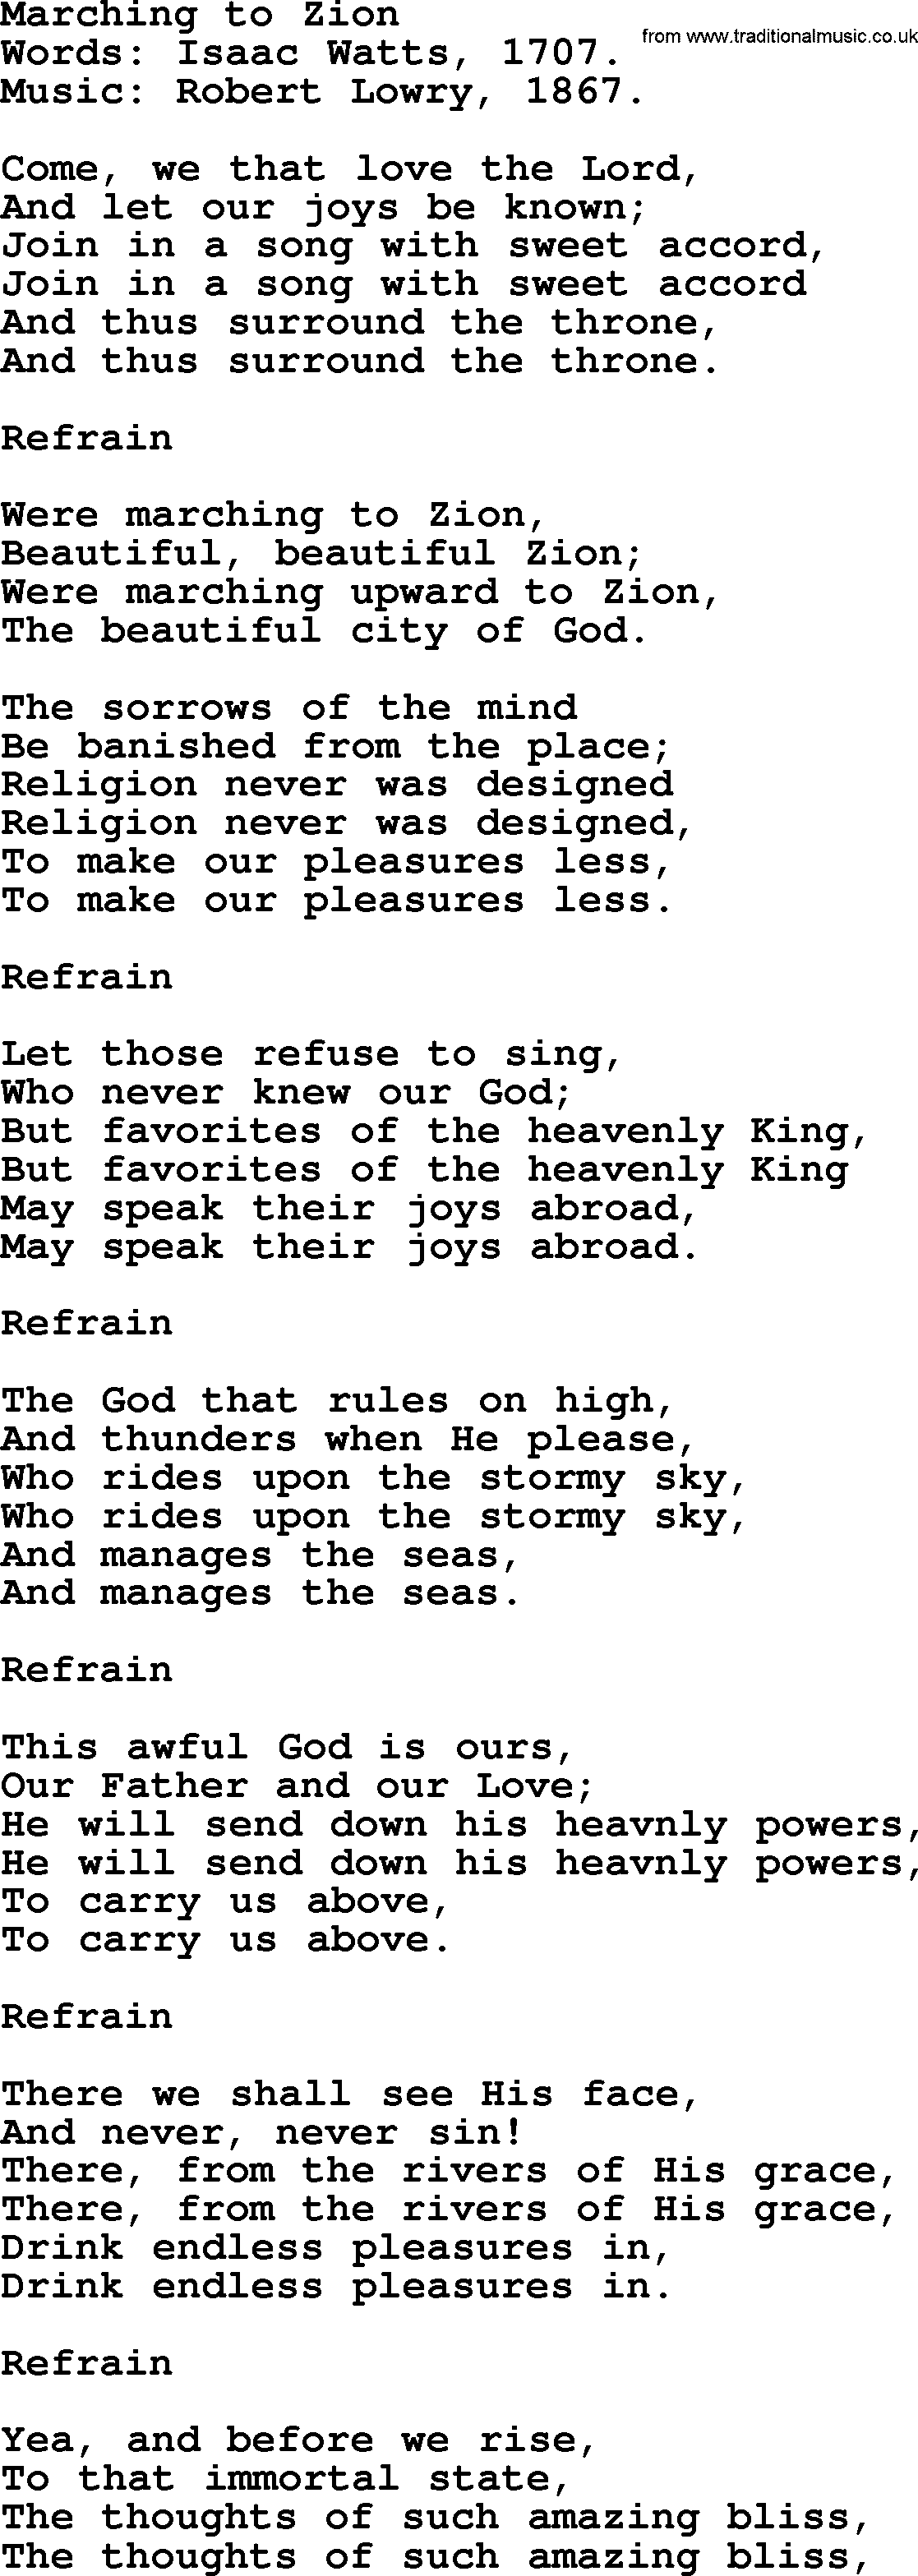 Isaac Watts Christian hymn: Marching to Zion- lyricss